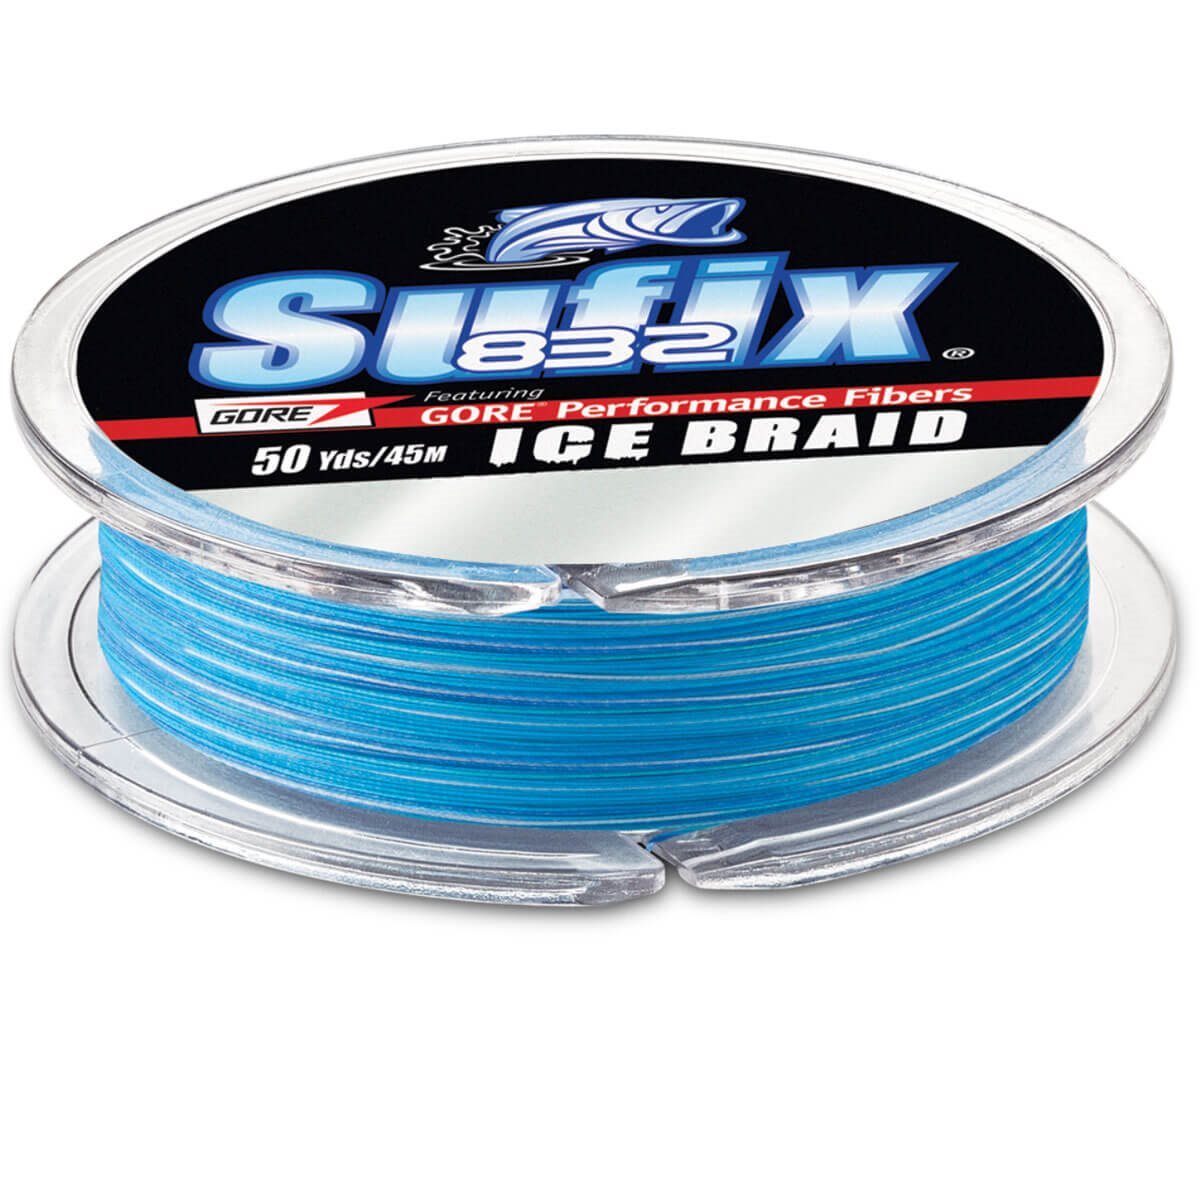 Sufix 832 Advanced Ice Braid